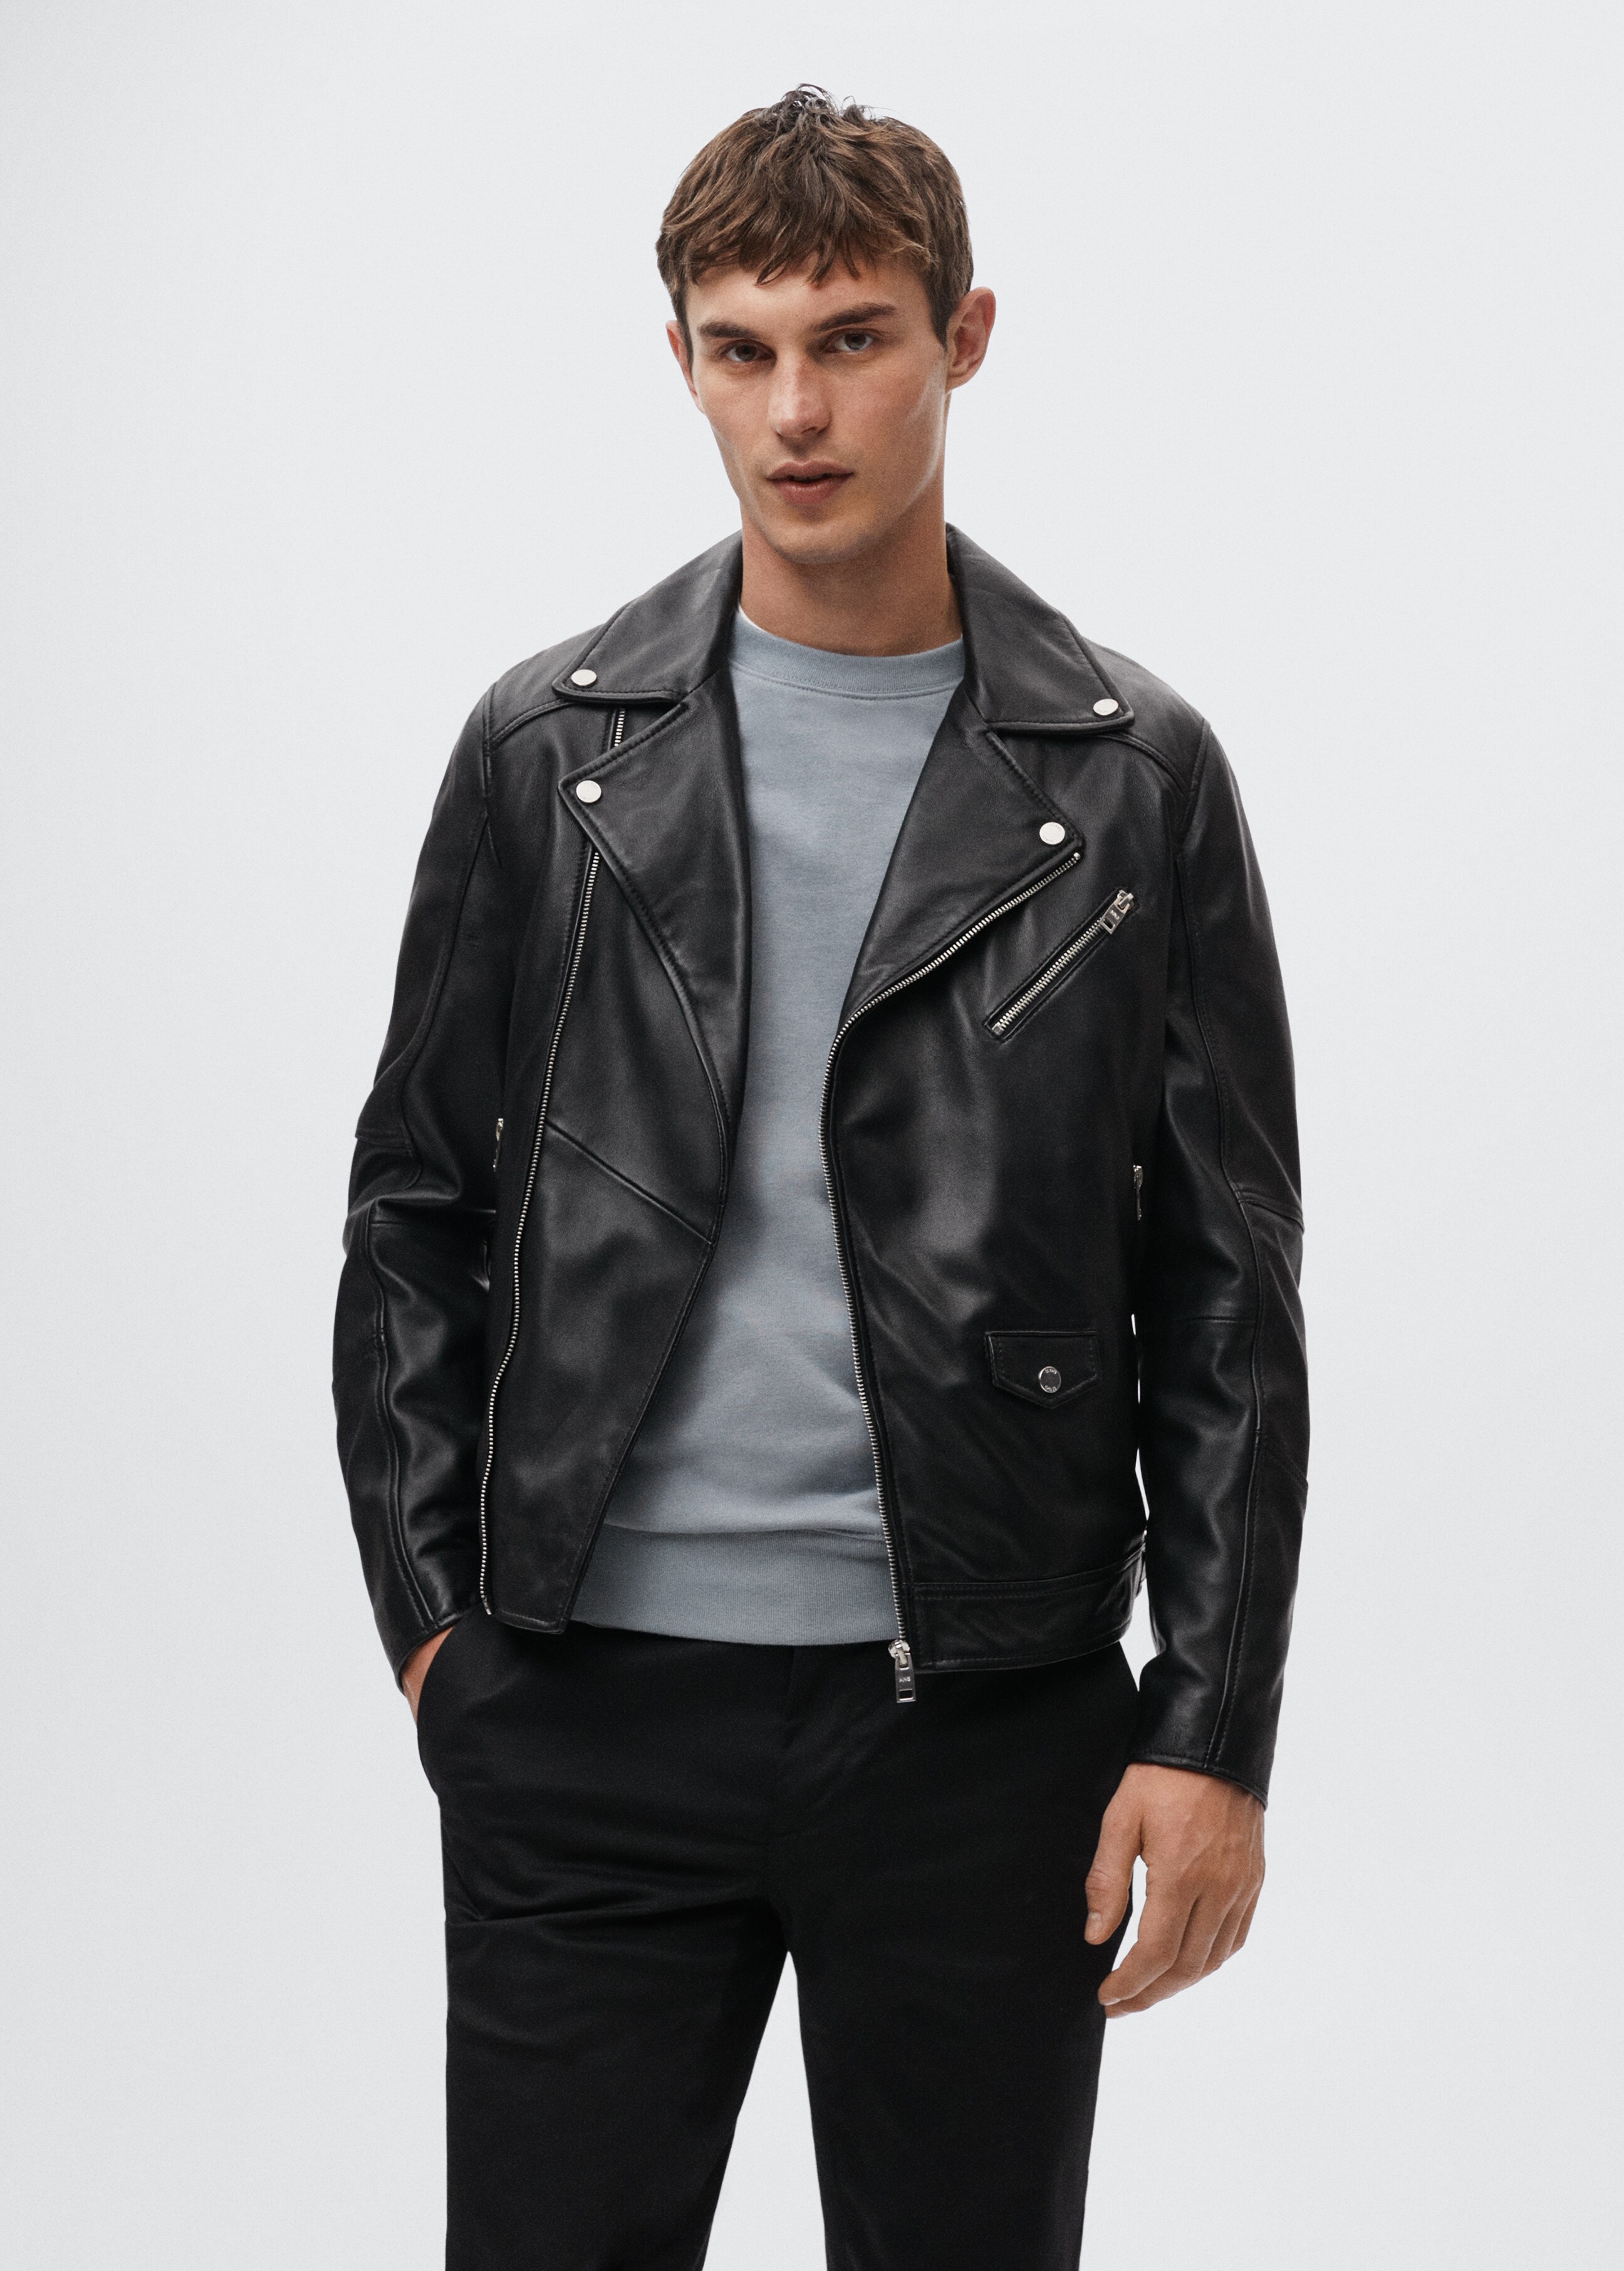 Leather biker jacket - Medium plane